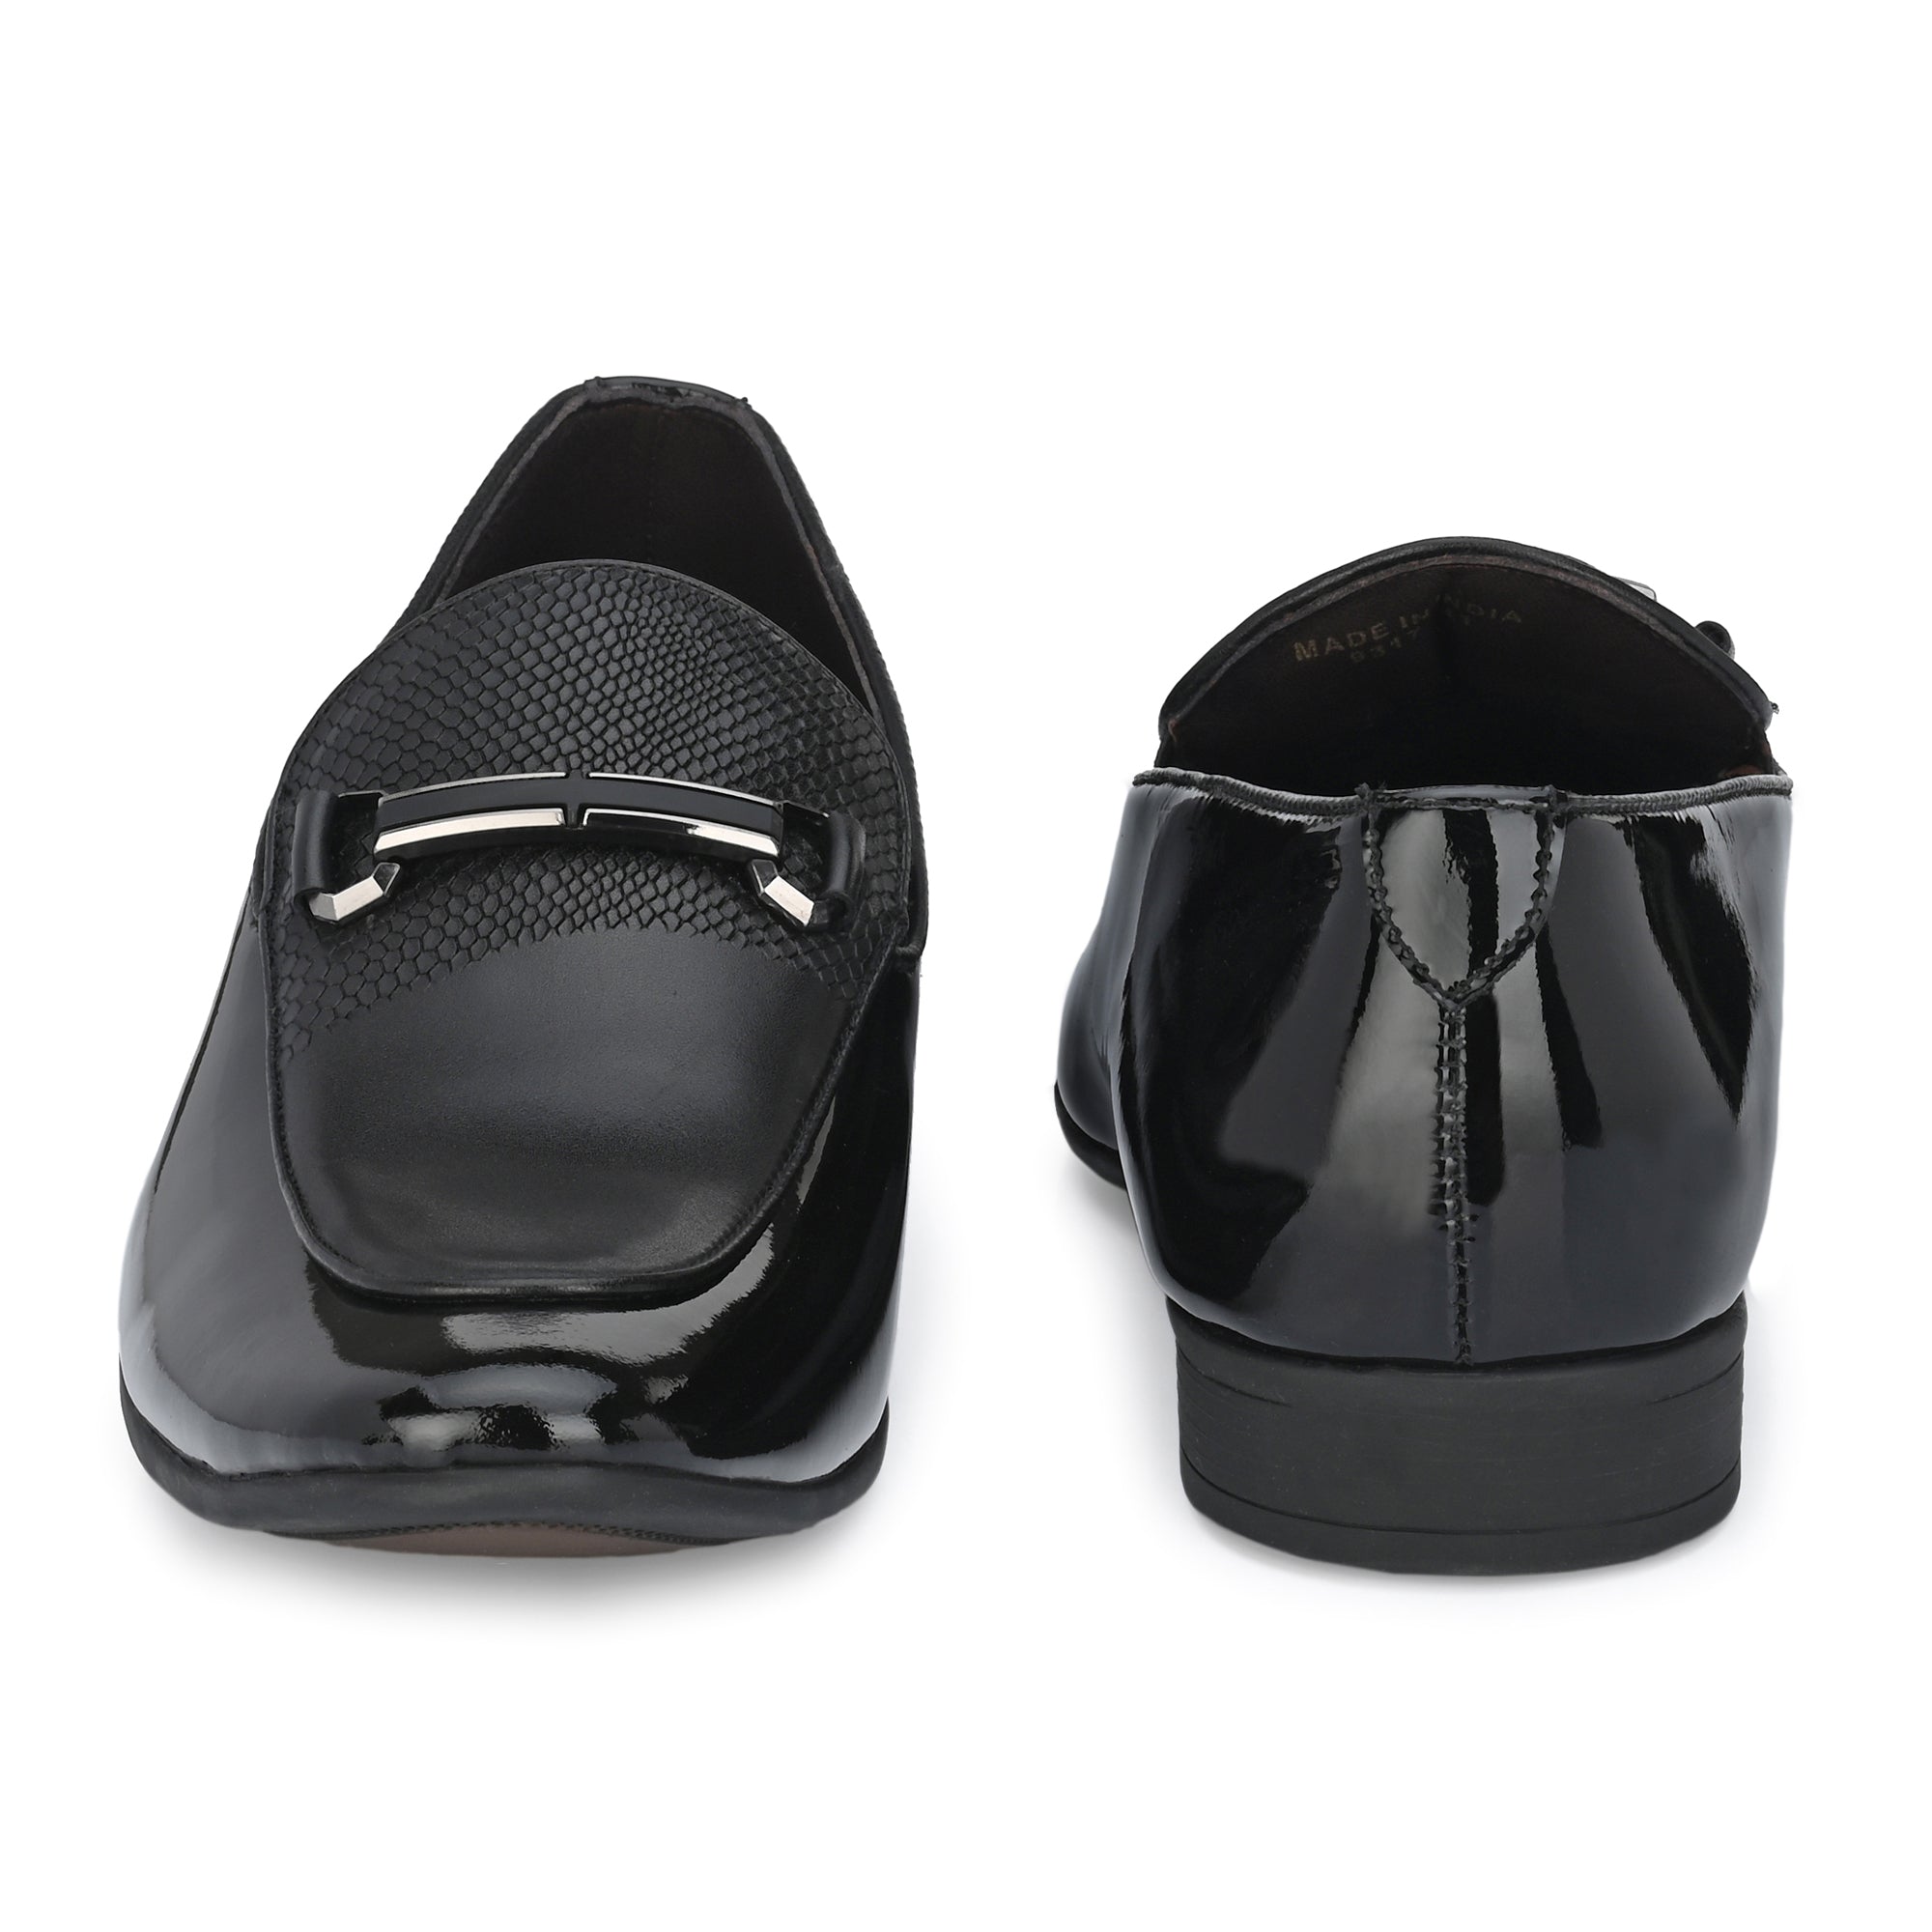 Egoss Buckled Formal Loafers Shoes For Men